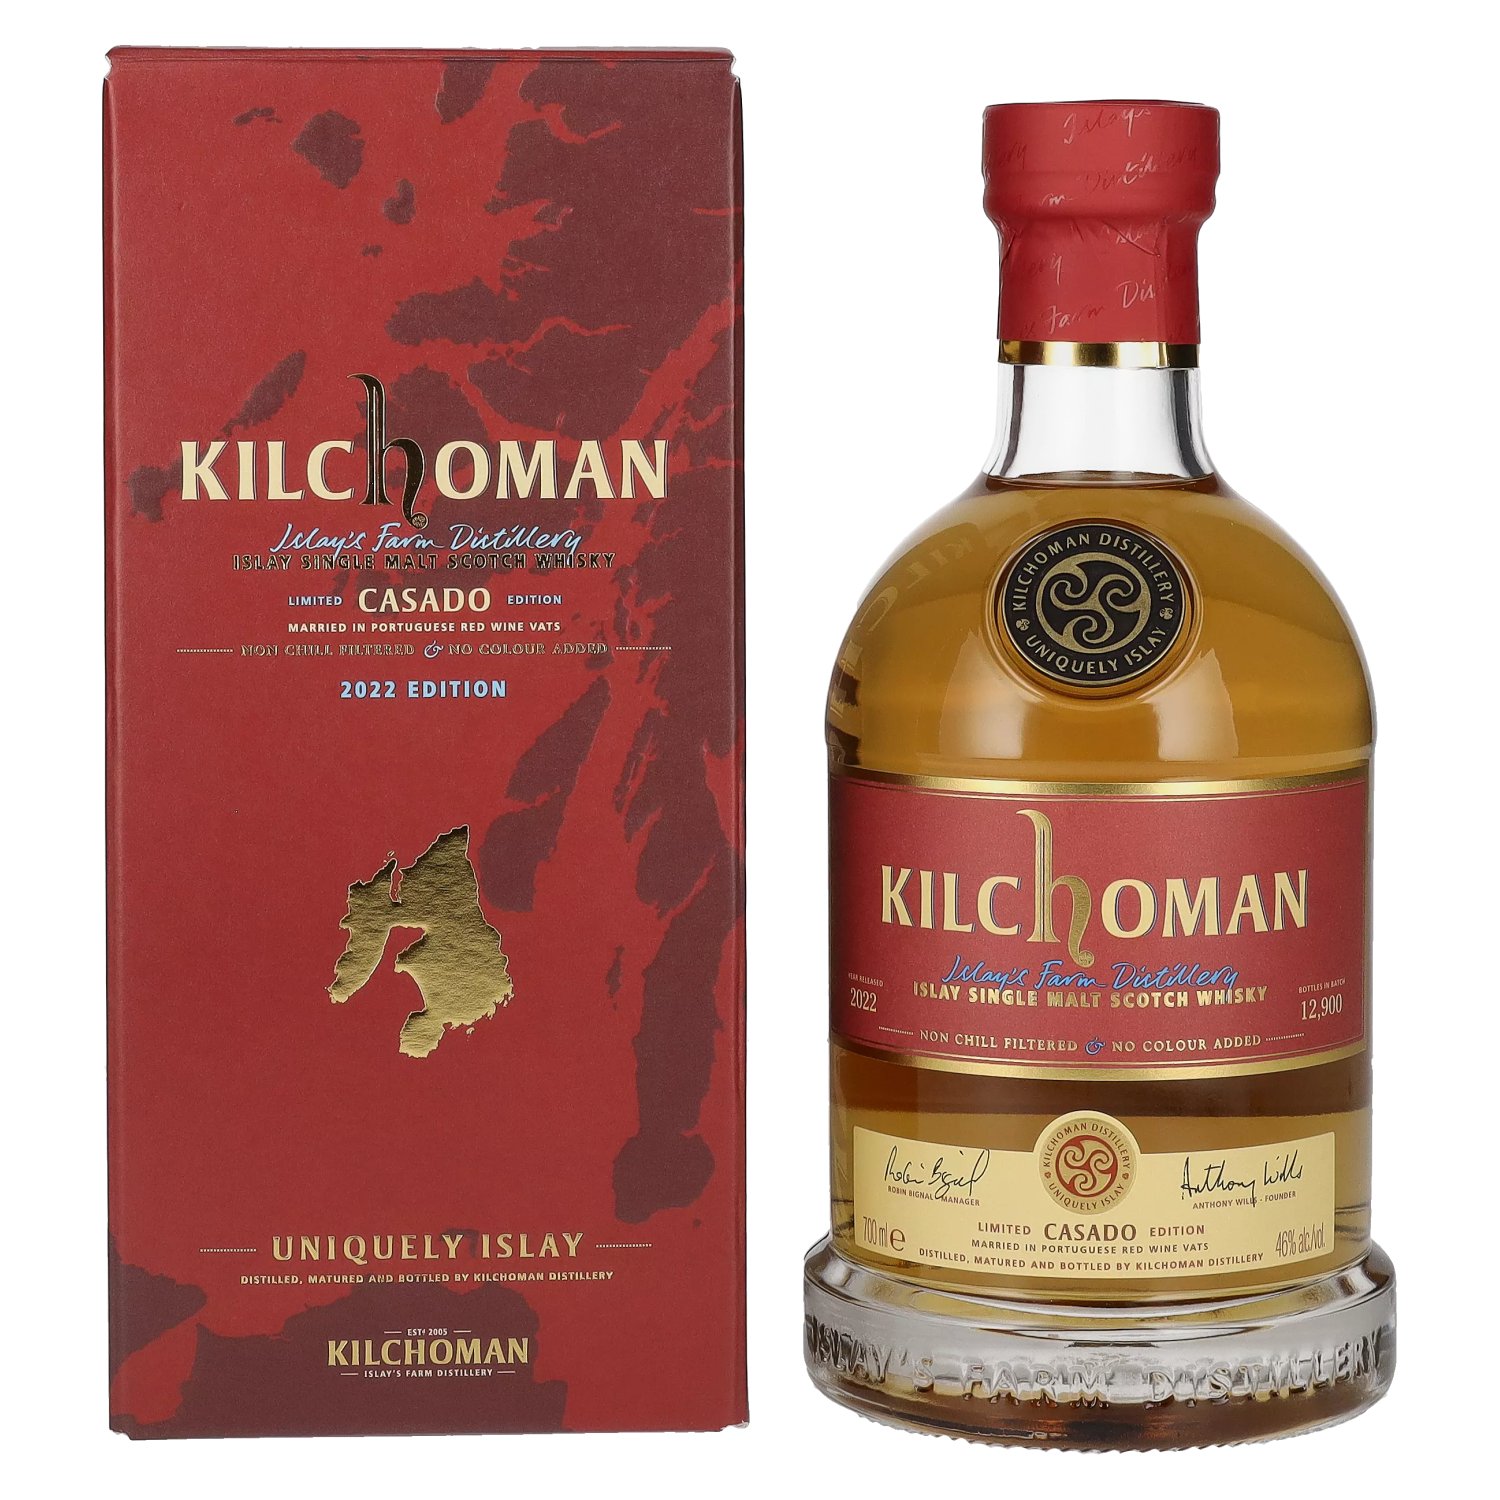 Kilchoman CASADO Islay Single Malt Limited Vol. 46% Edition in Whisky Scotch 0,7l Geschenkbox